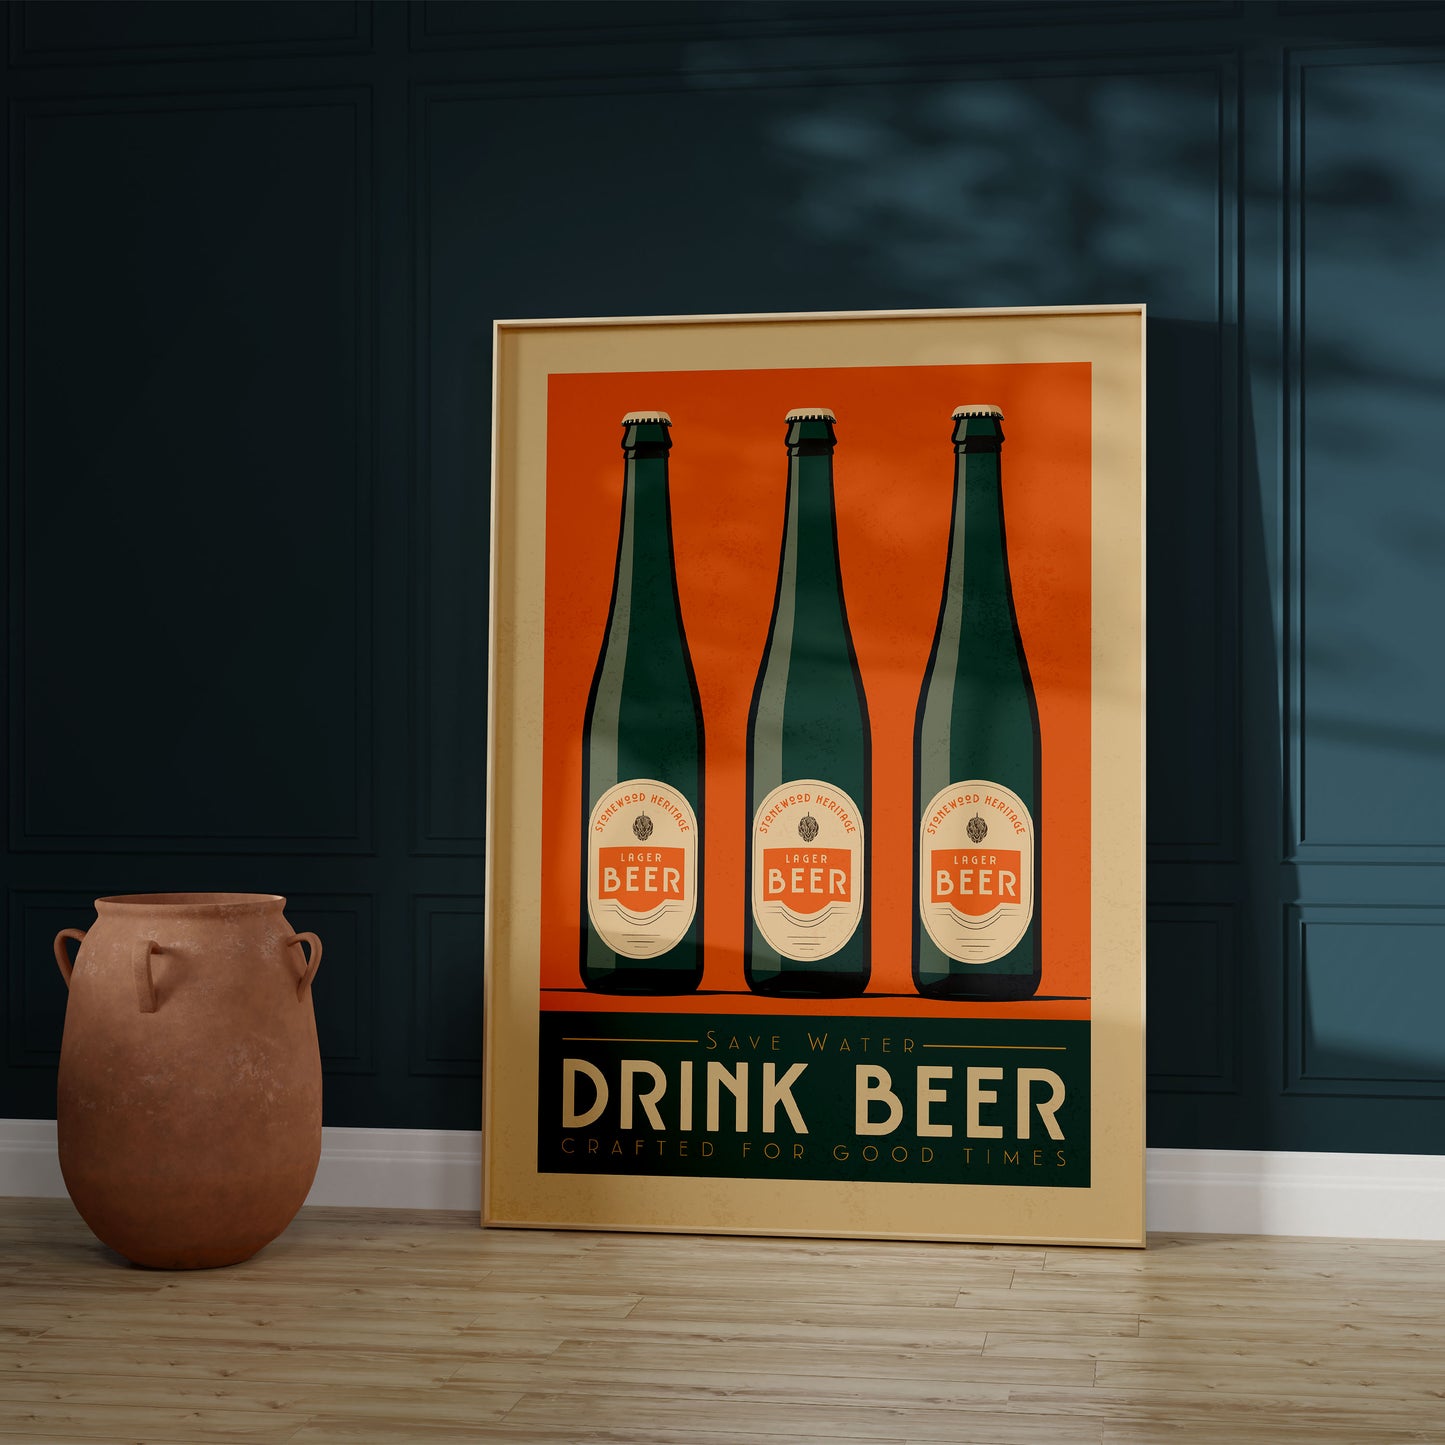 Beer - Vintage Cocktail Poster